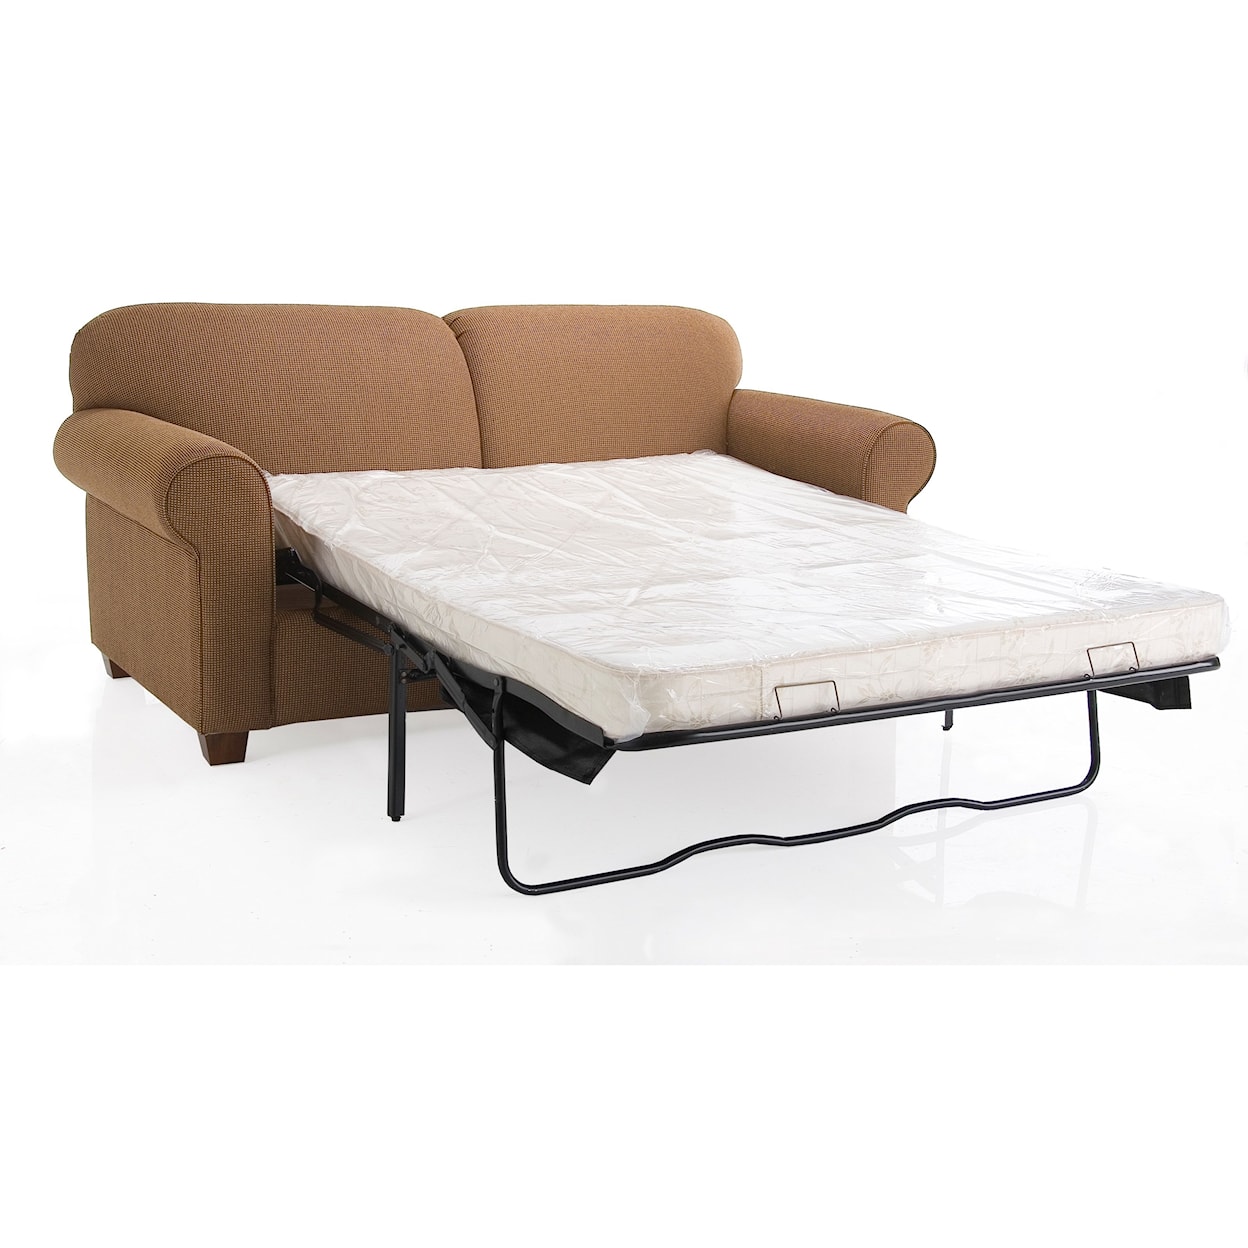 Decor-Rest 2455 Double Bed Sofa